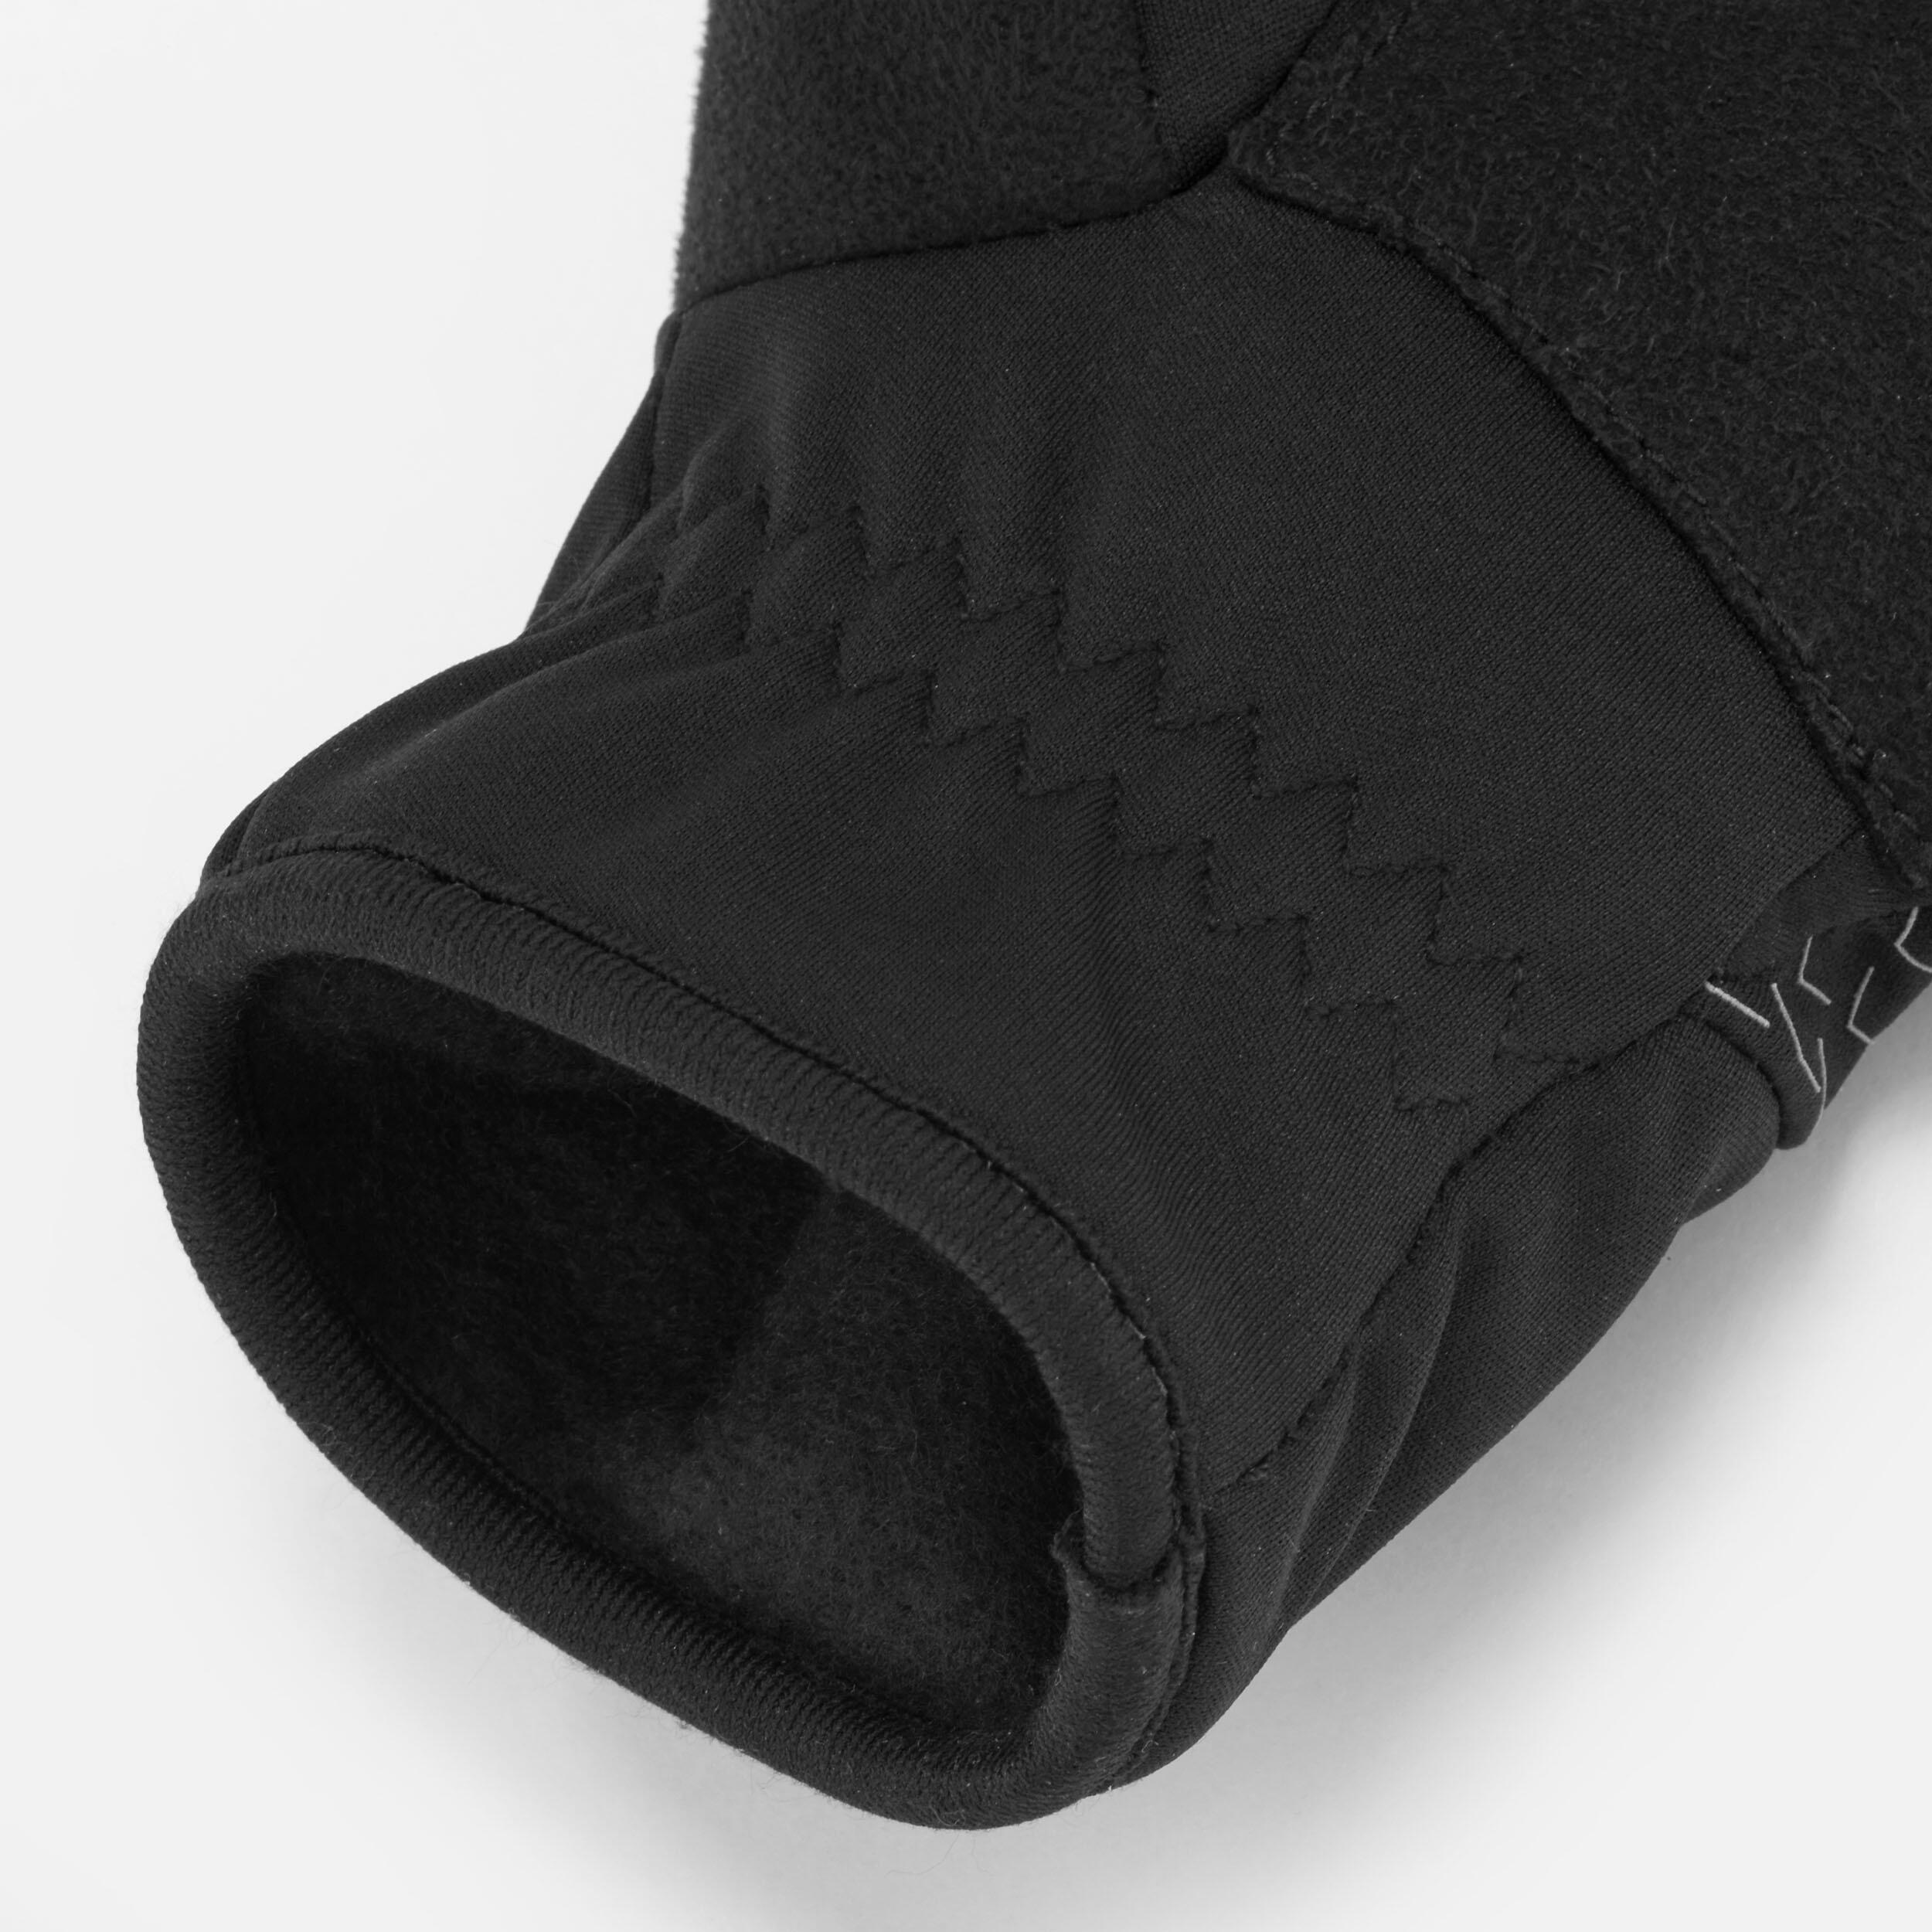 Kids' Cross-Country Ski Warm Gloves XC S 100 - Black 7/7